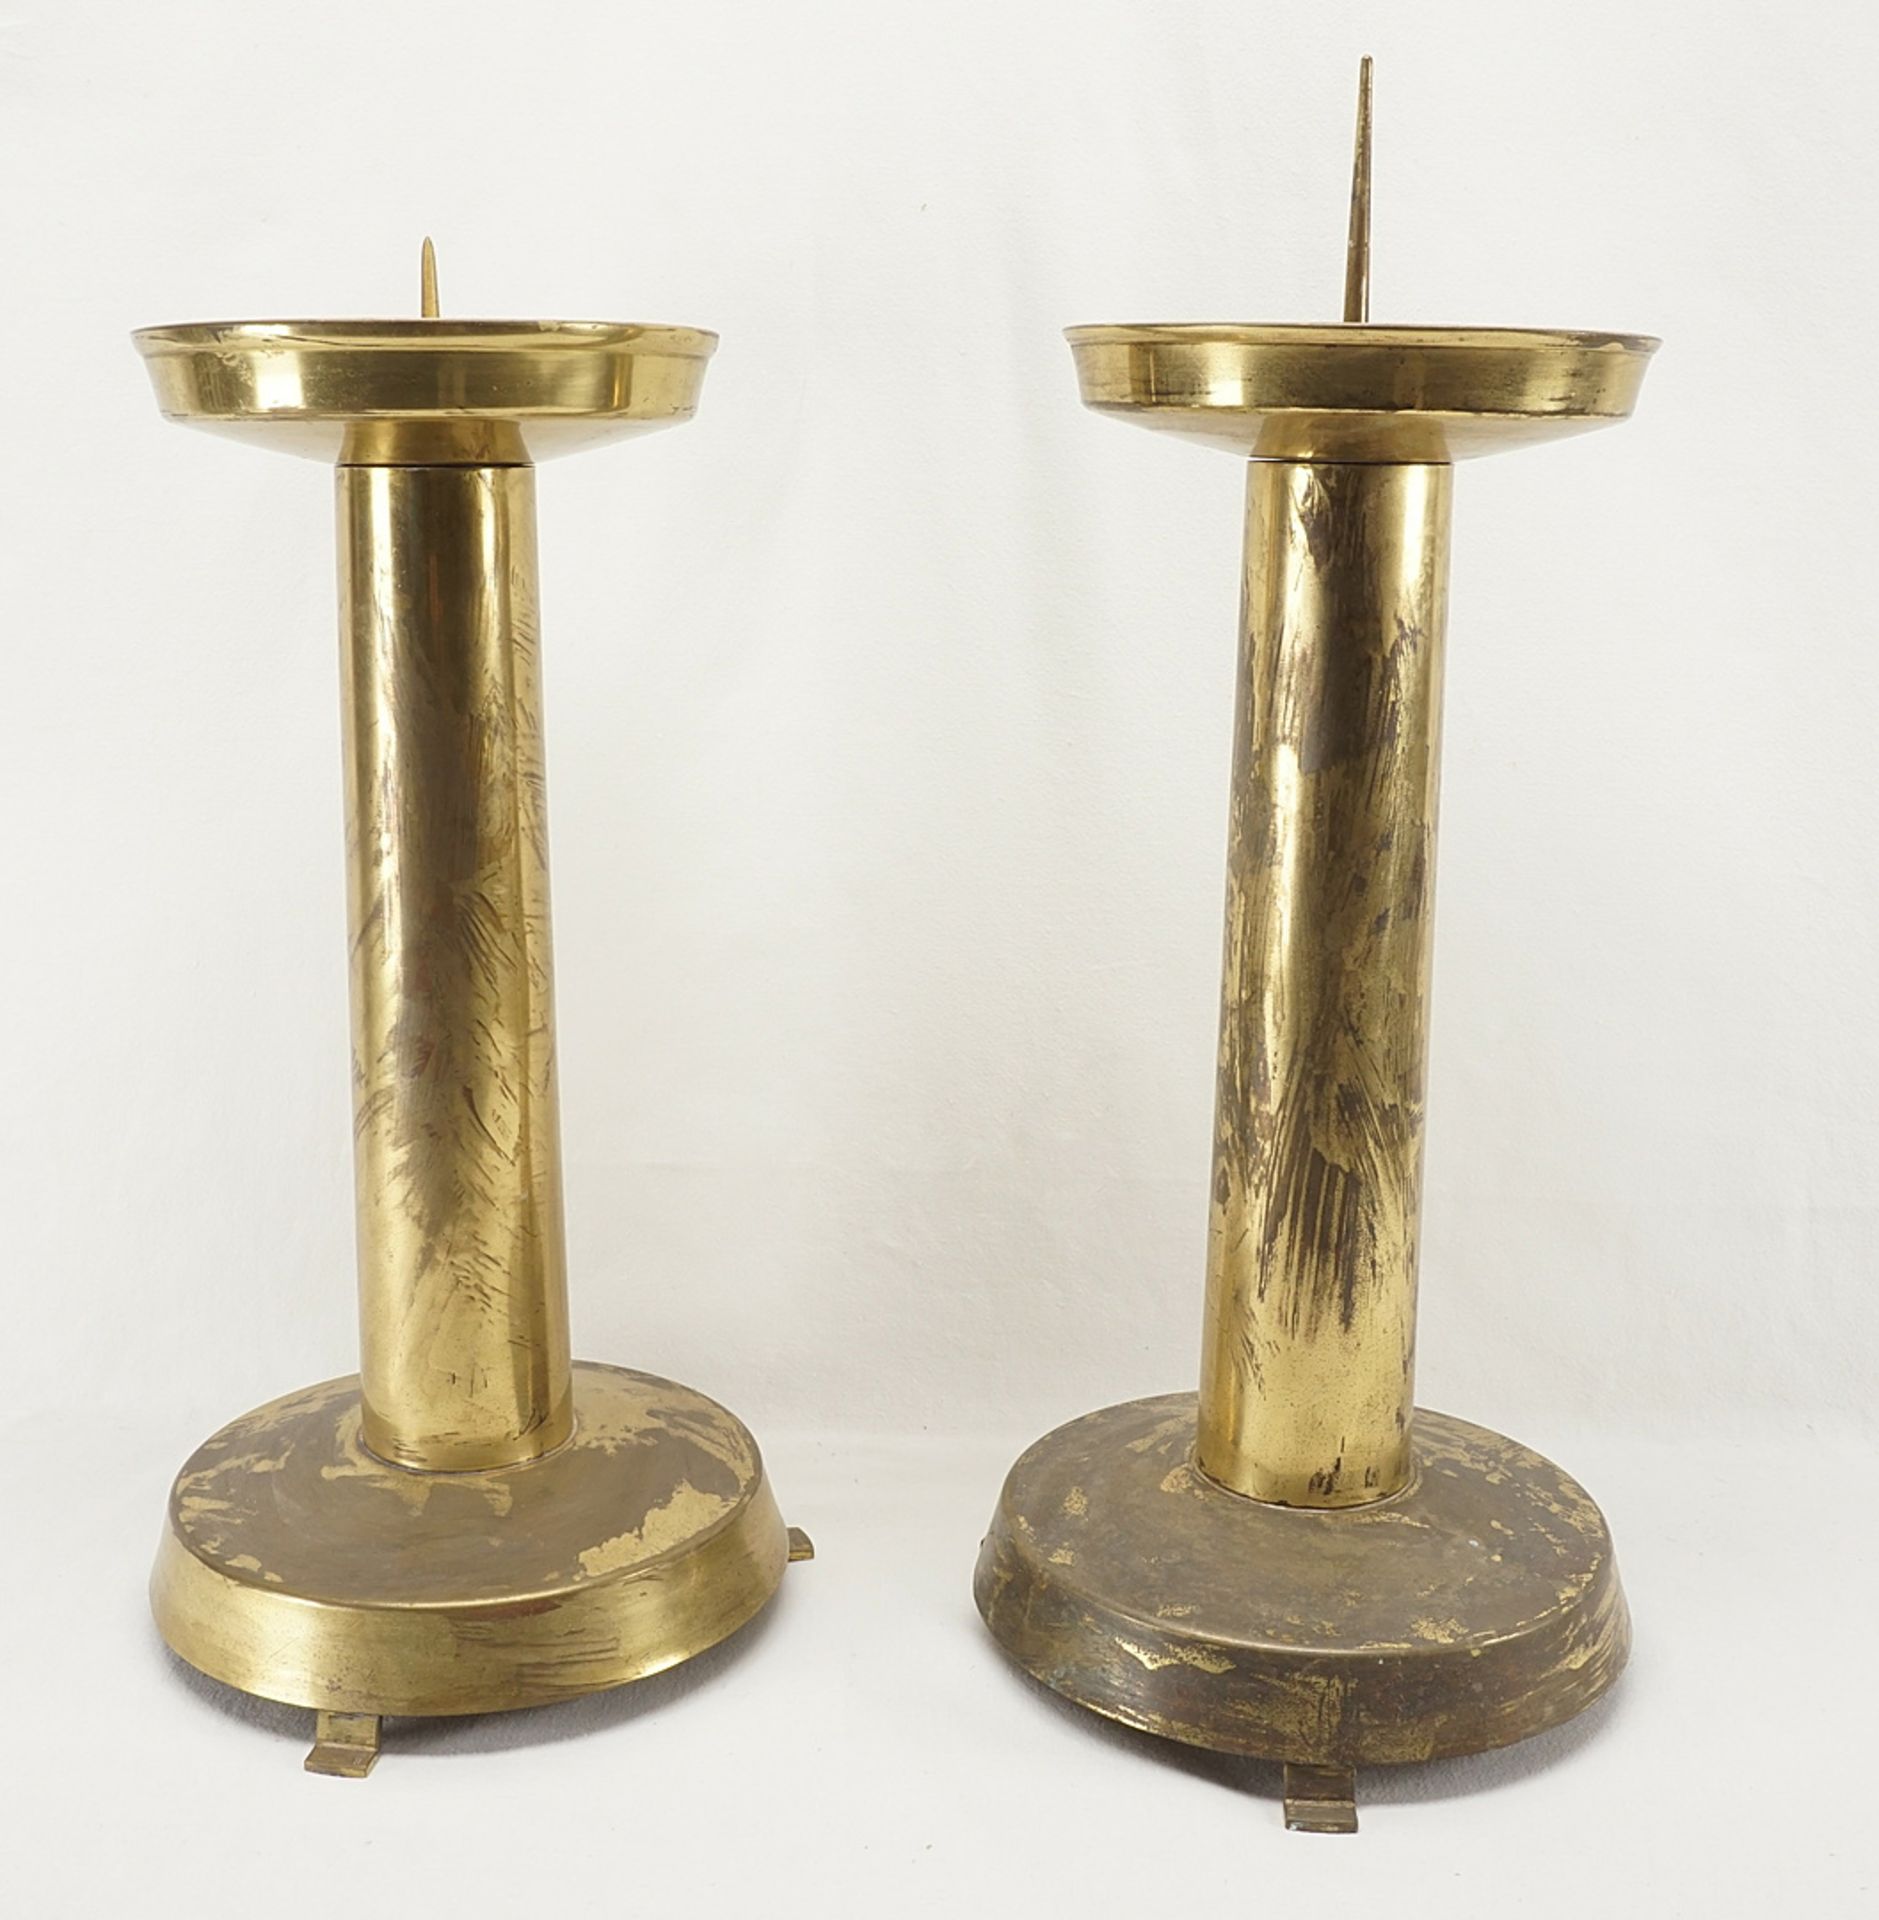 Two church candlesticks, around 1894